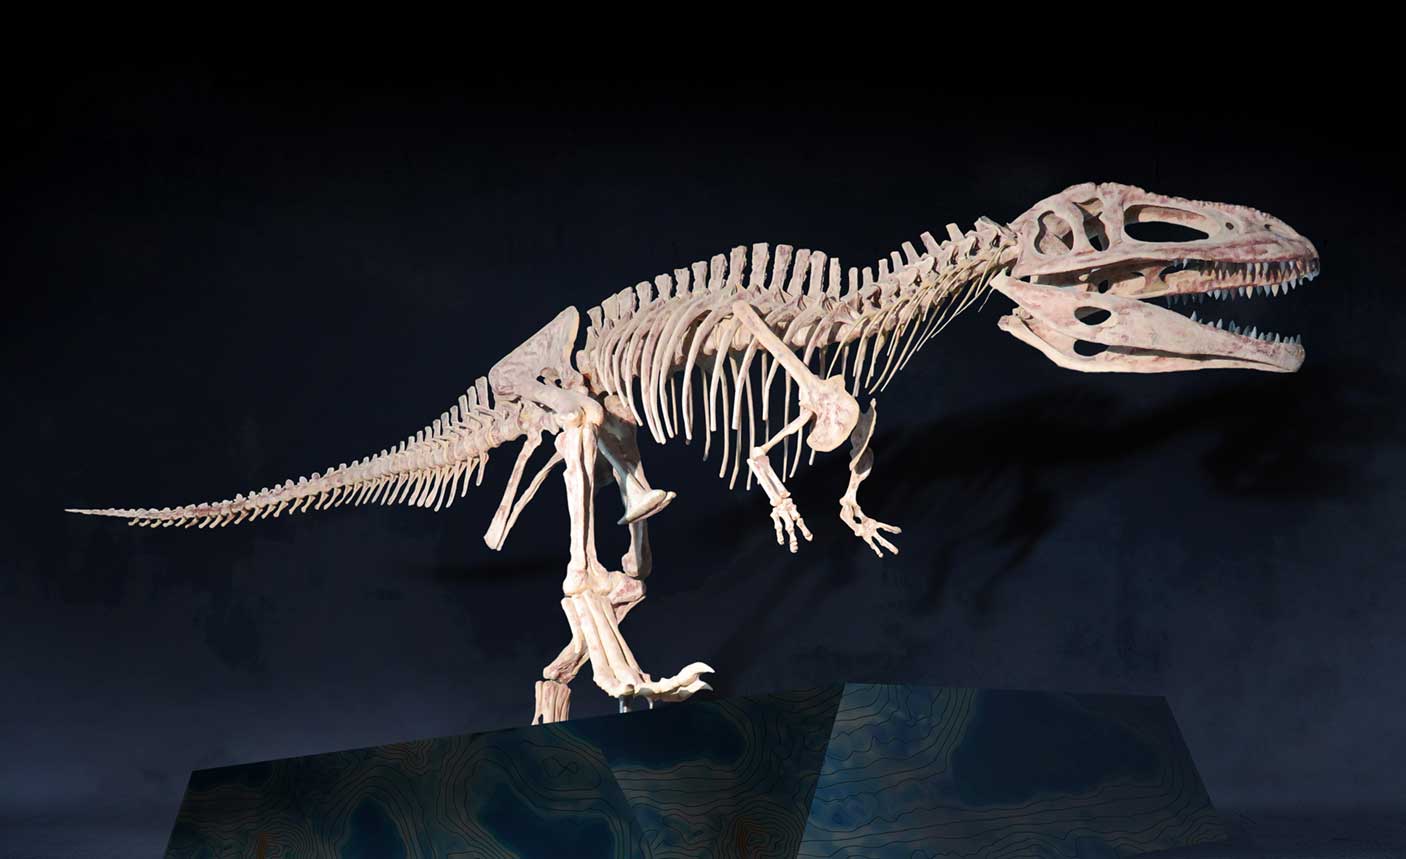 Tyrannotitan chubutensis fossil display at the museum